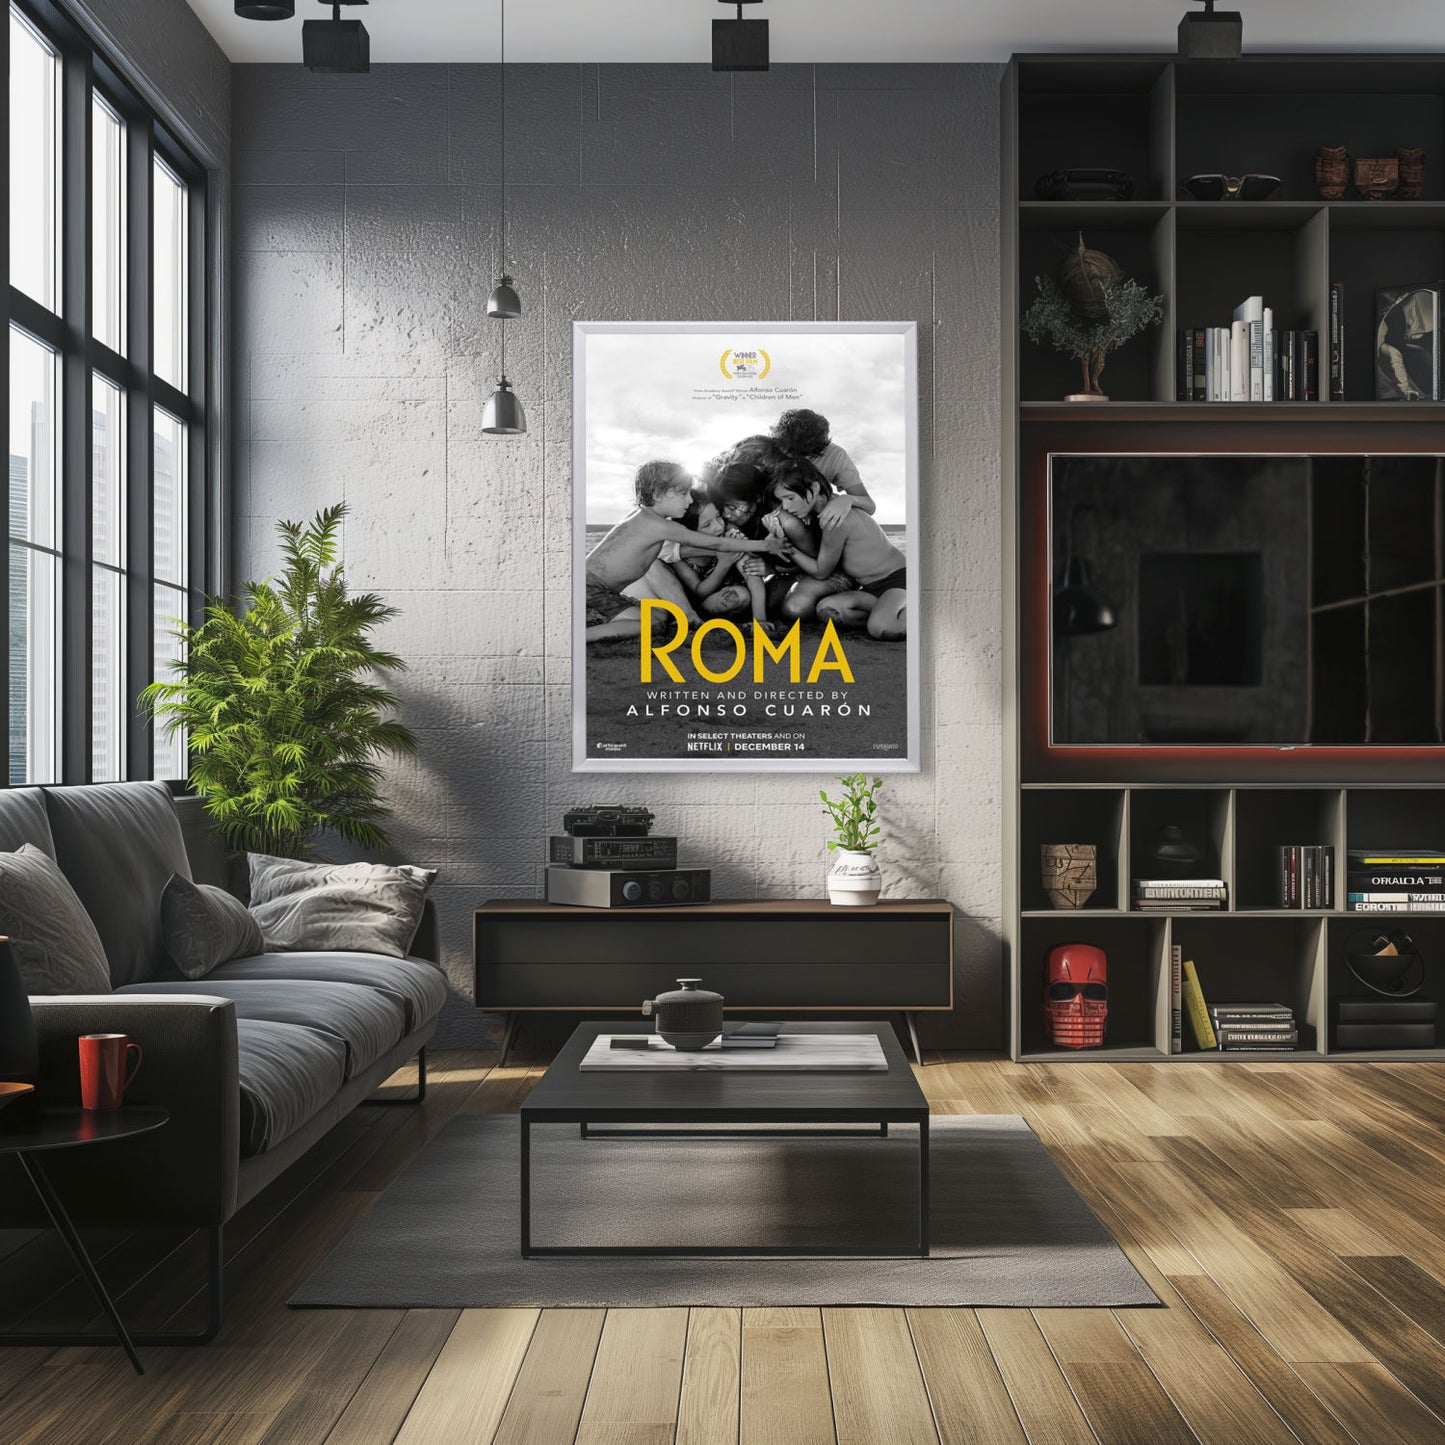 "Roma" (2018) Framed Movie Poster